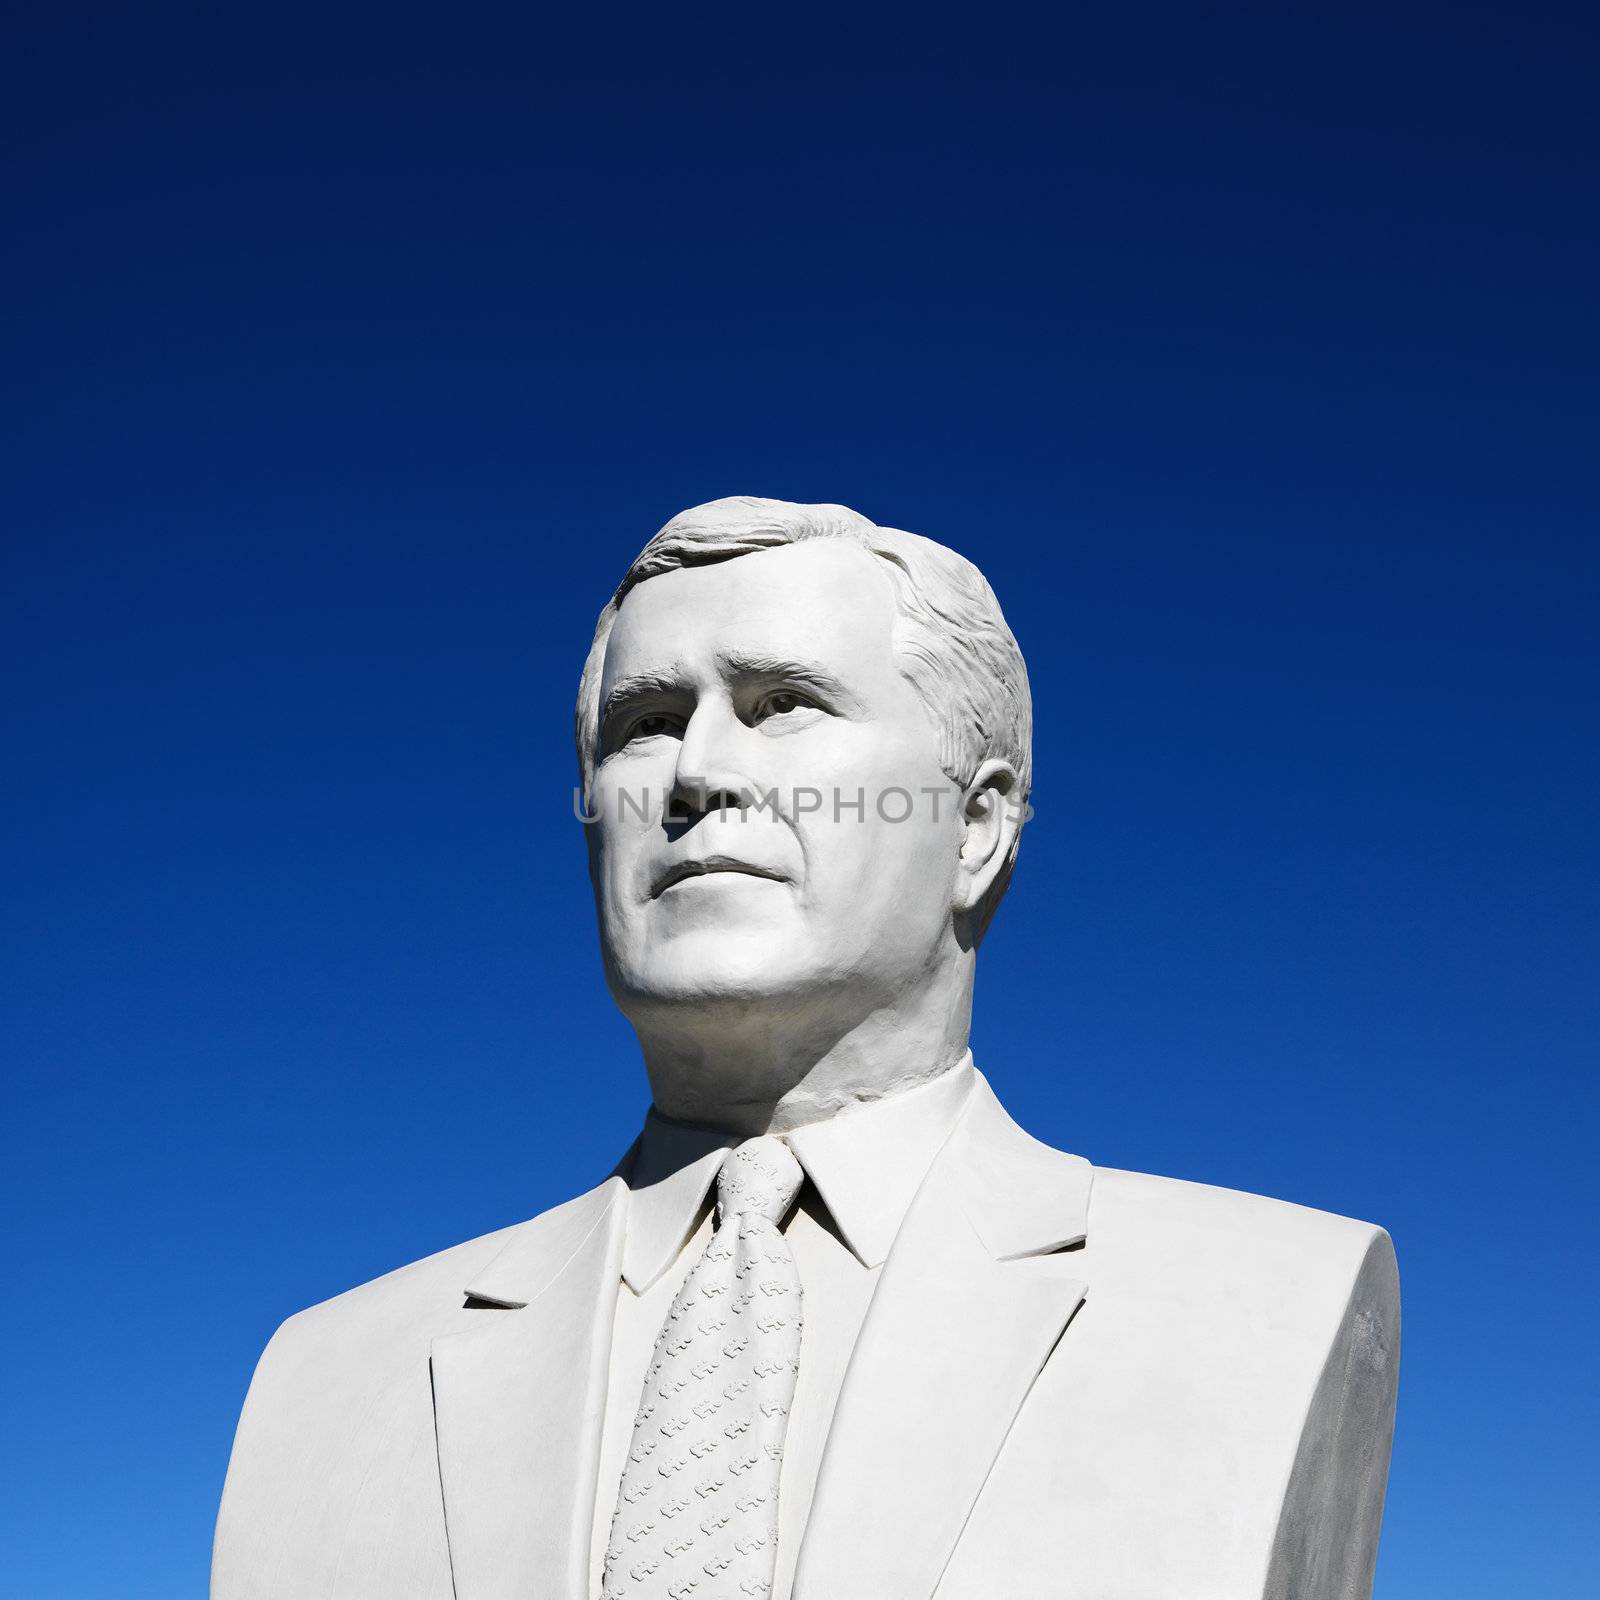 Bust of George Bush sculpture against blue sky in President's Park, Black Hills, South Dakota